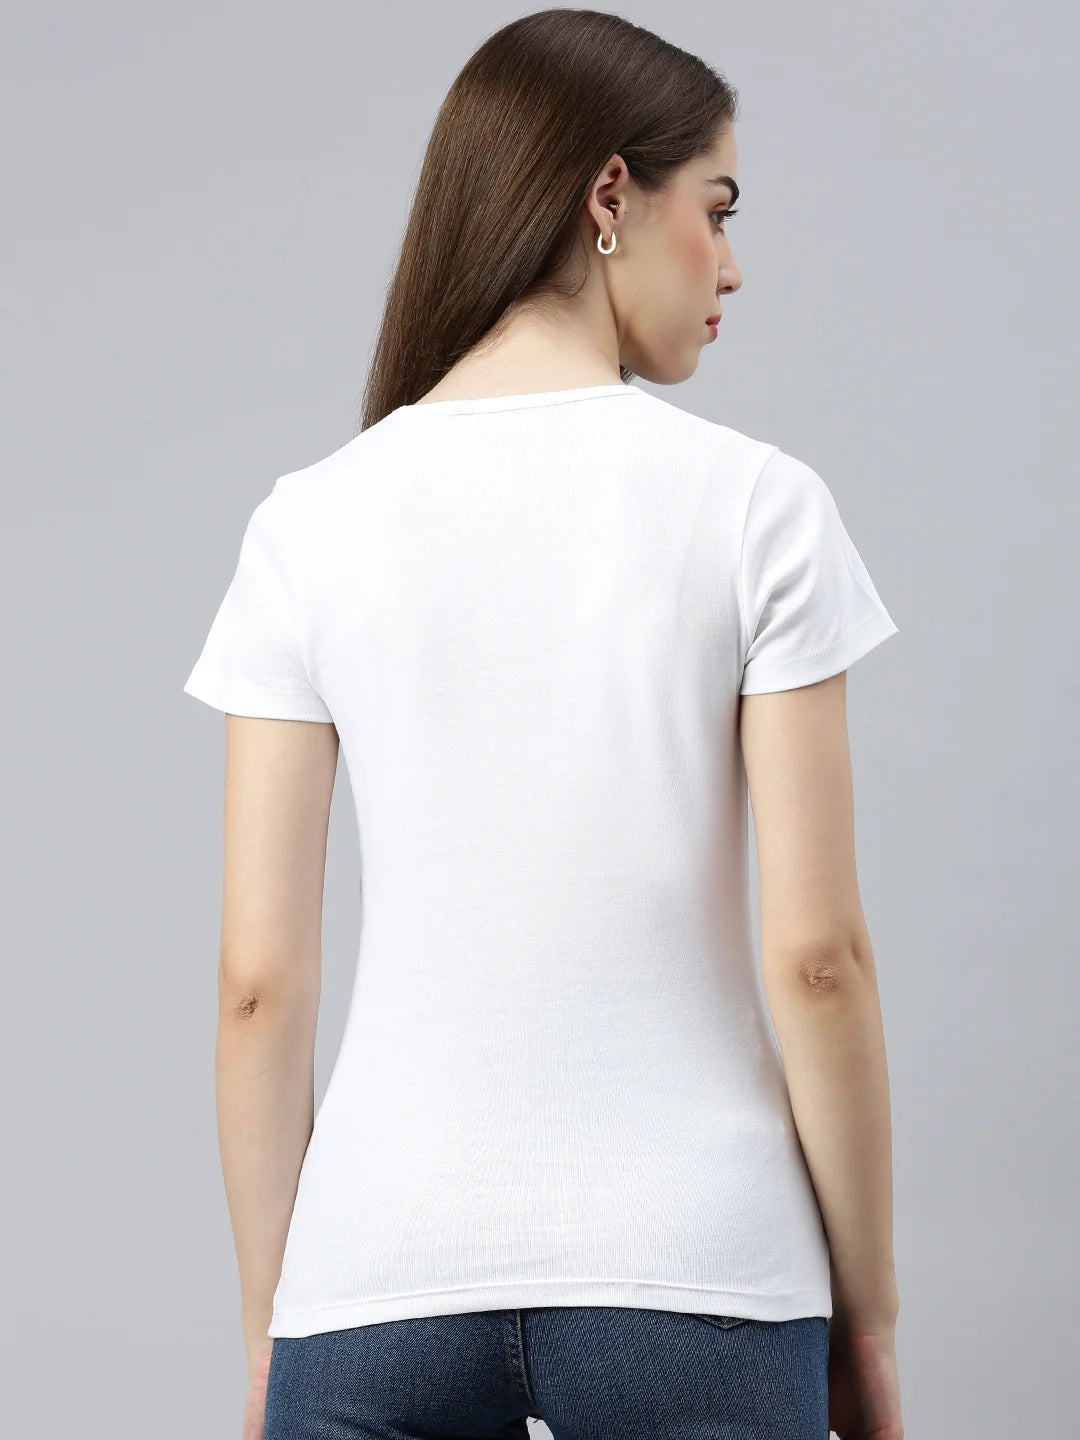 frauen-efia-baumwolle-v-ausschnitt-t-shirt-blanc-back